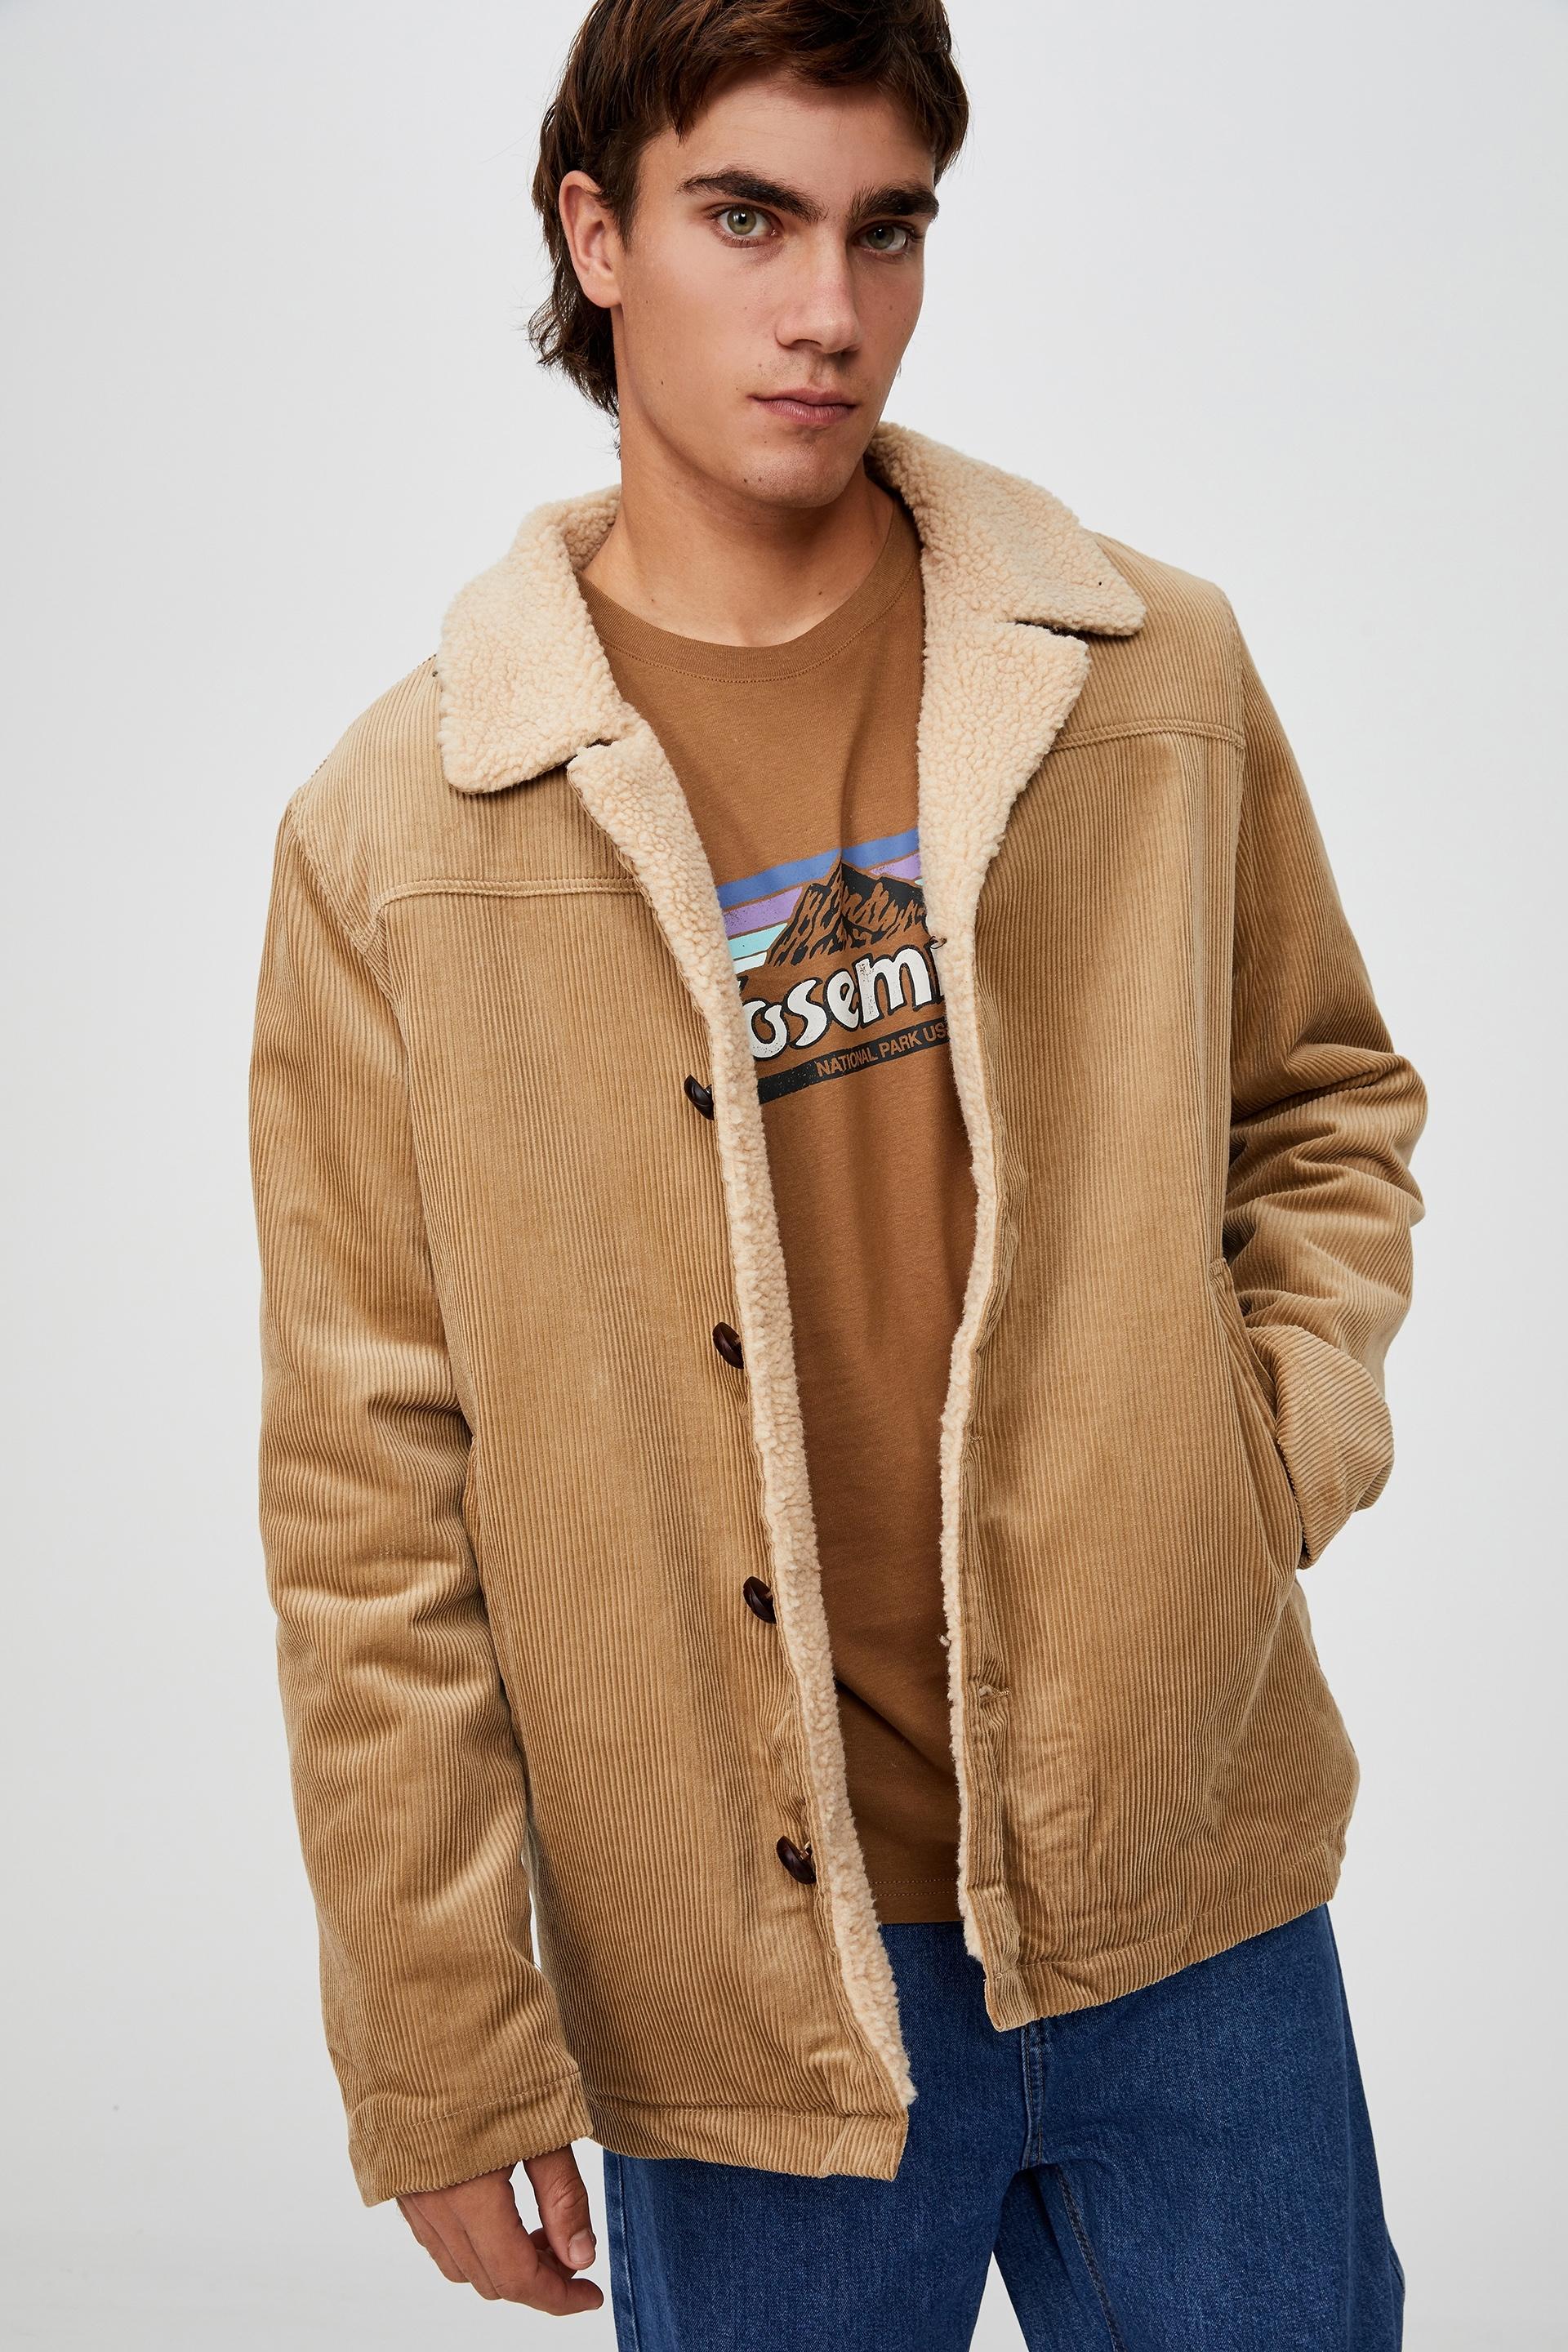 Ranch jacket - tan cord Cotton On Jackets | Superbalist.com